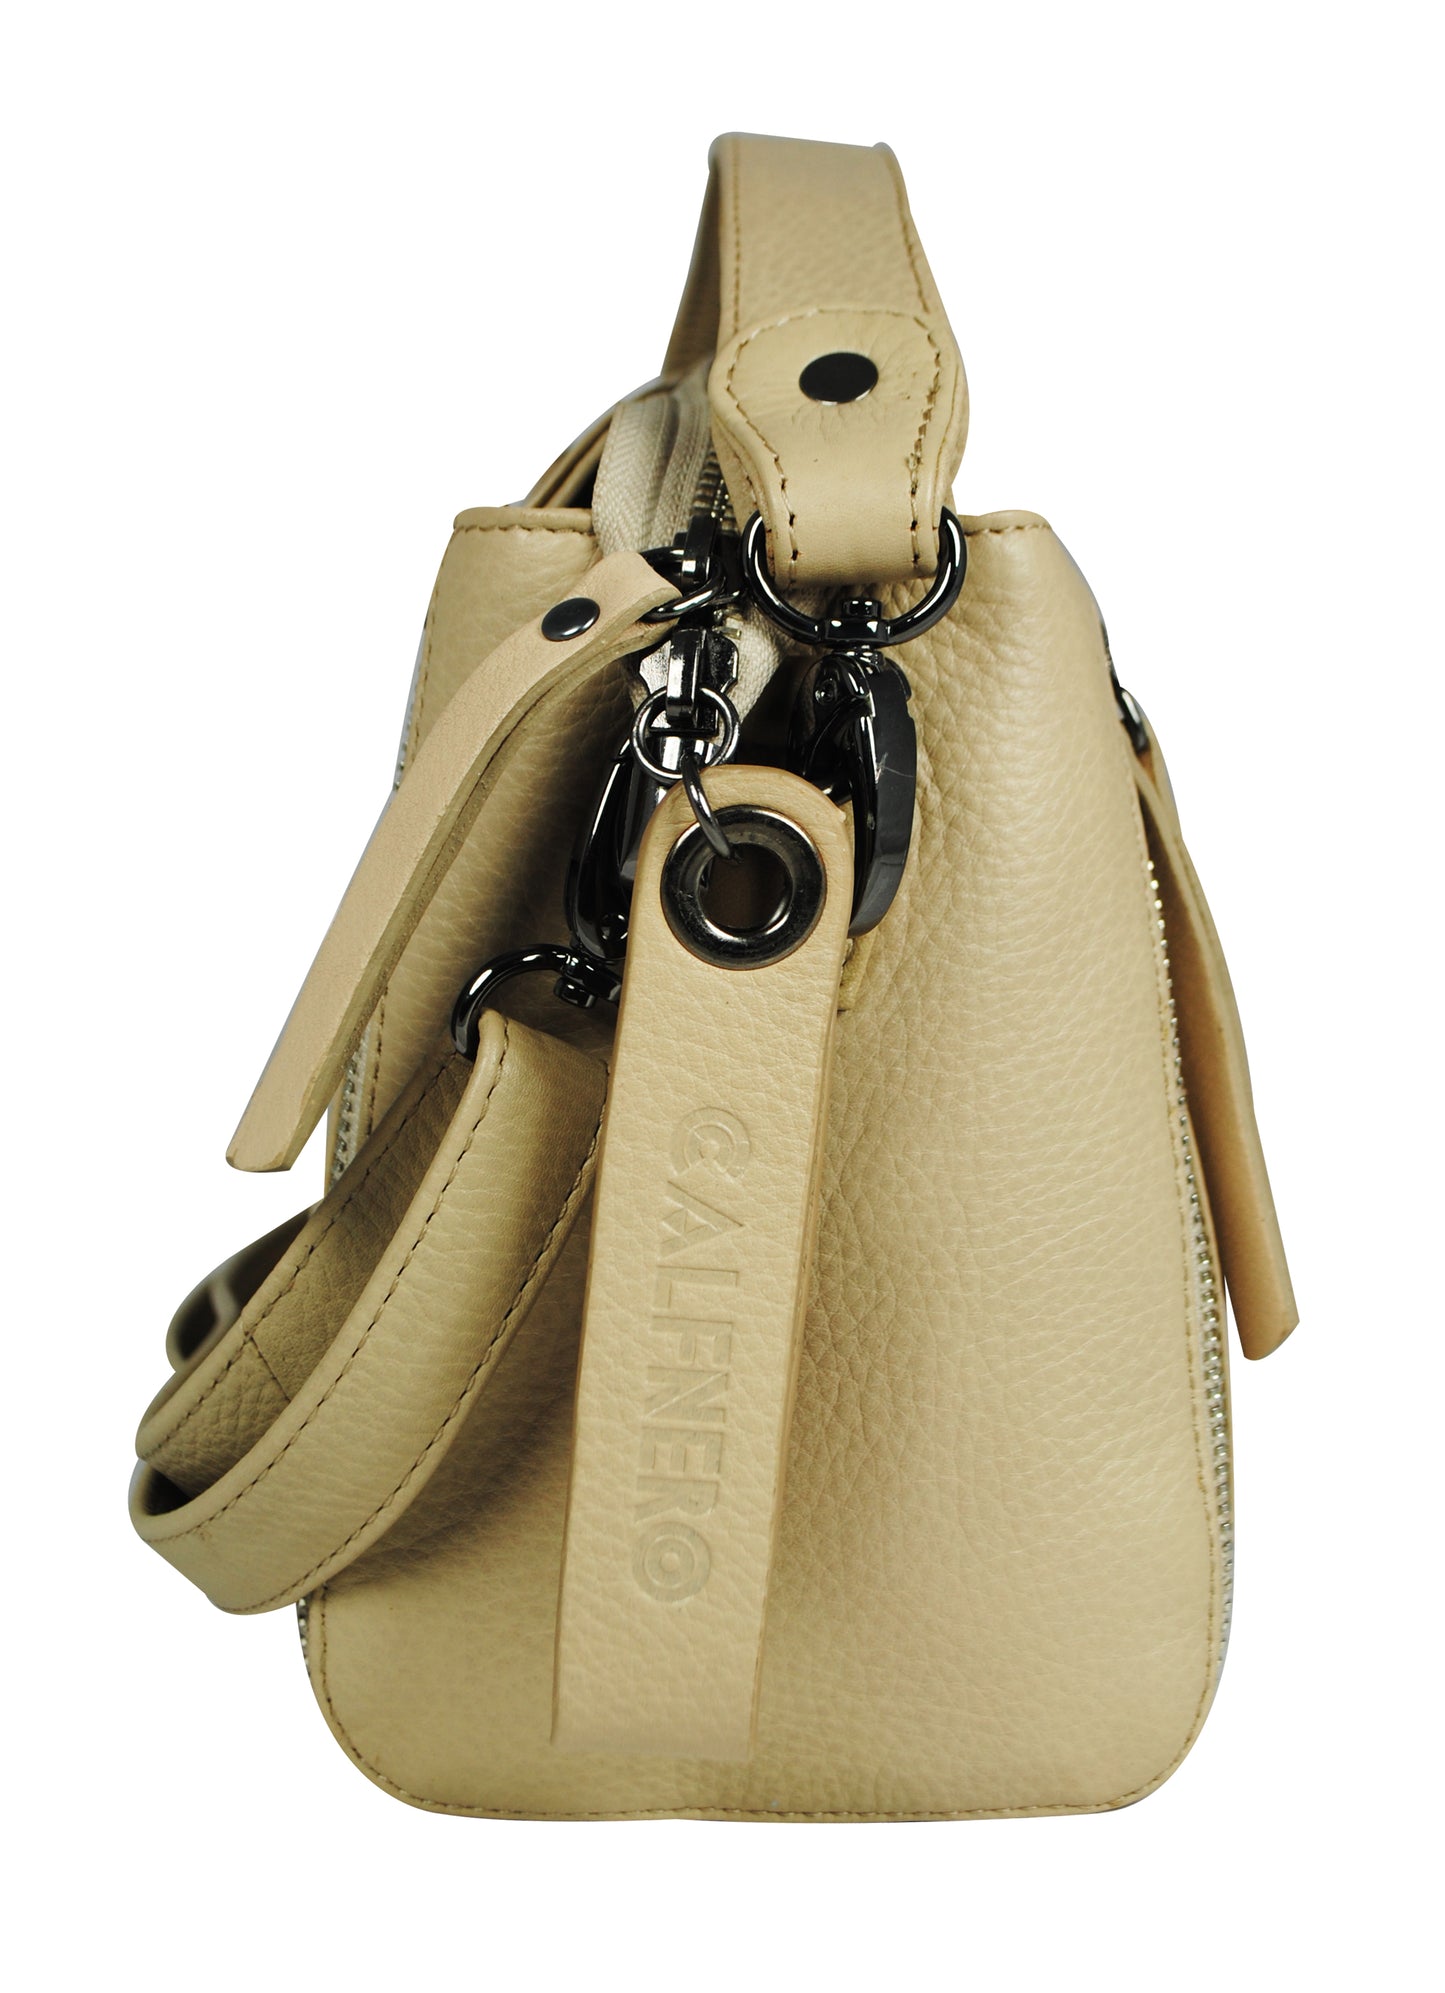 Calfnero Women's Genuine Leather Hand Bag (3044-Beige)